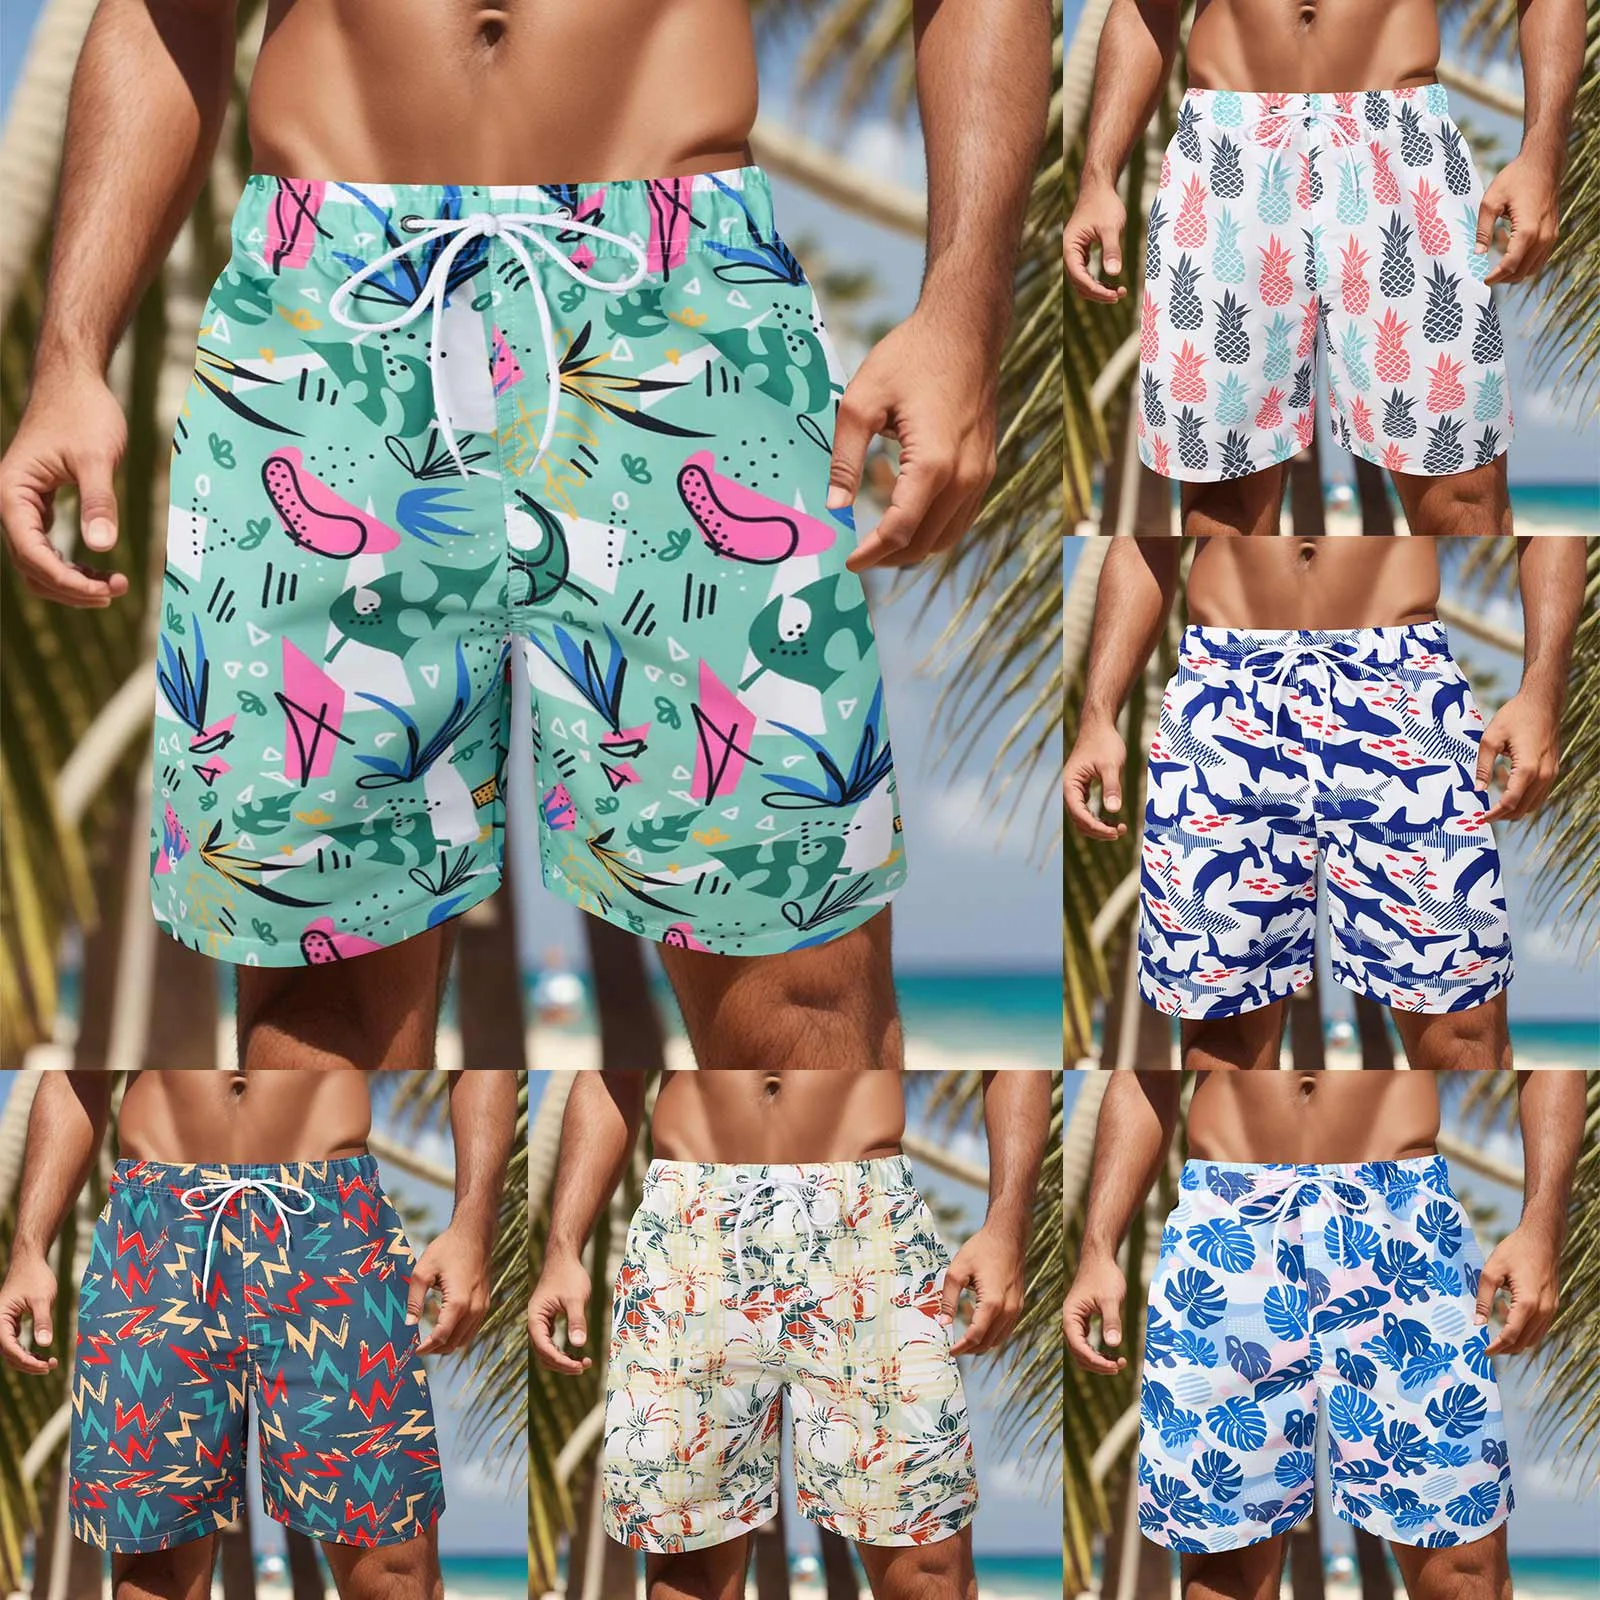 Mens לשחות מכנסיים קצרים הדפס אננס יבש מהירה לחוף לוח מכנסיים קצרים עם רשת רירית קיץ בגדי ים גלישה בגד ים גברים מכנסיים קצרים . ' - ' . 5